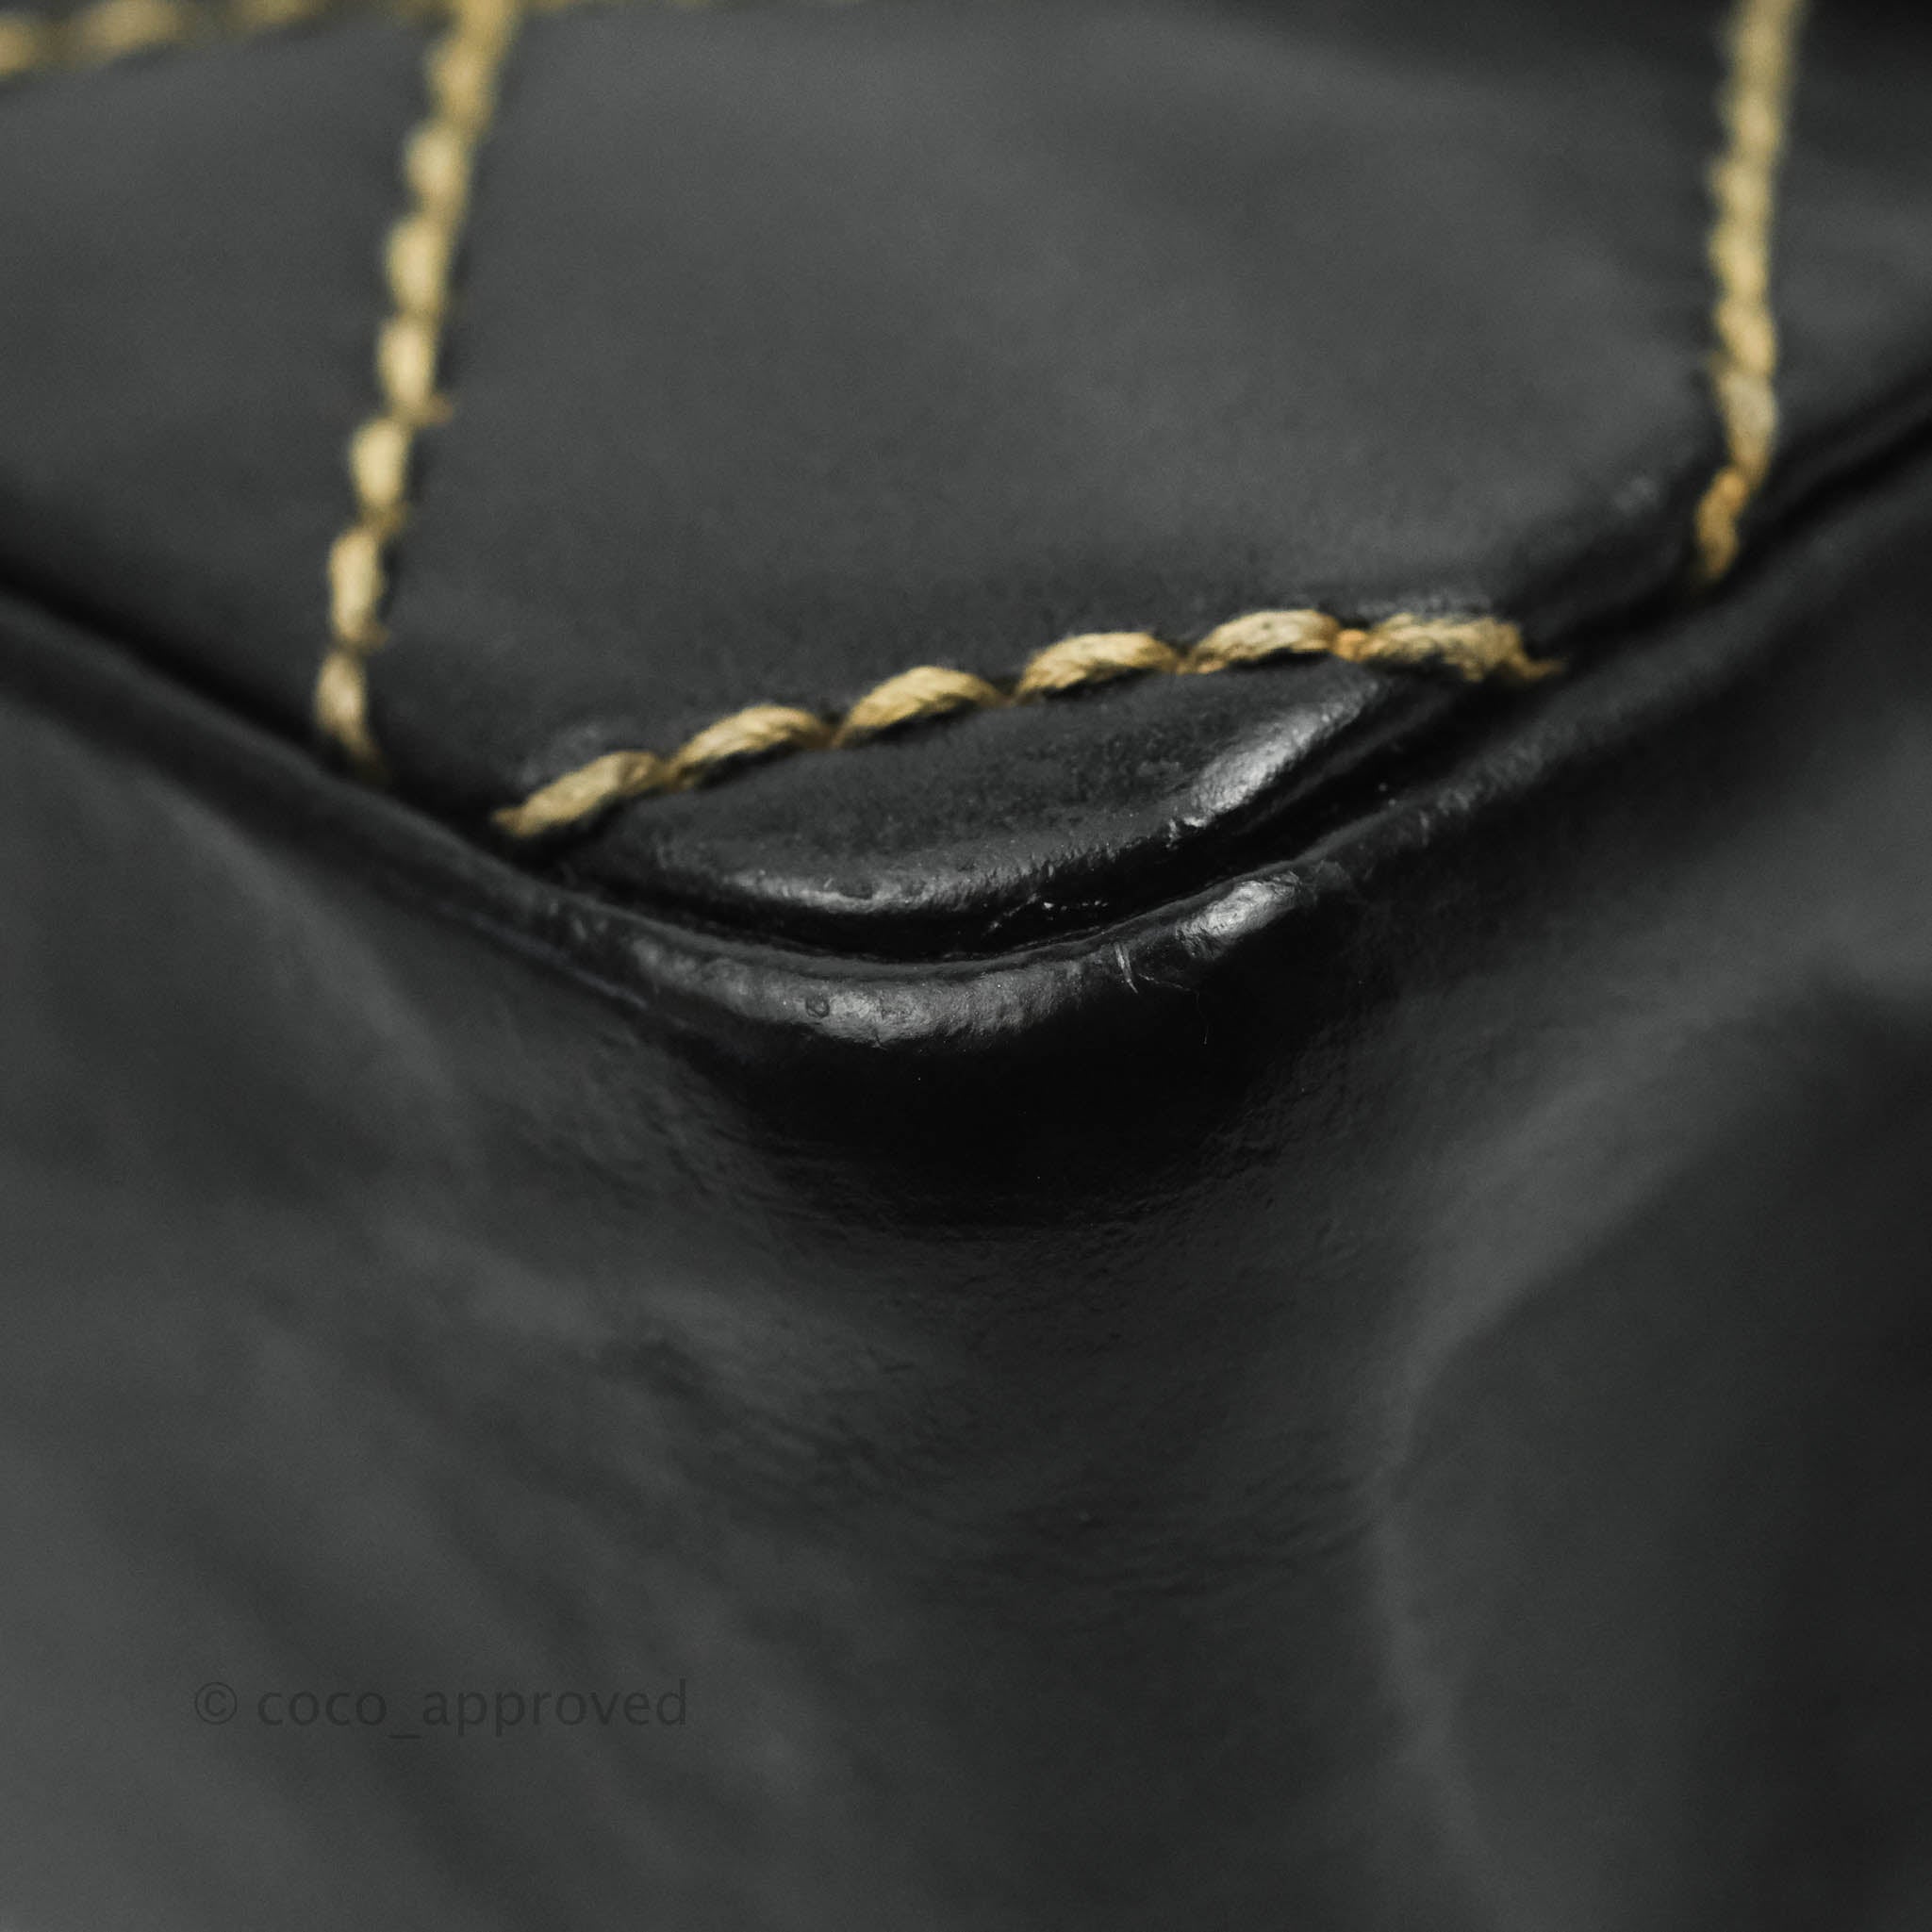 CHANEL, Bags, 204 2005 Chanel Black Caviar Bag With Jumbo Stitched Logo